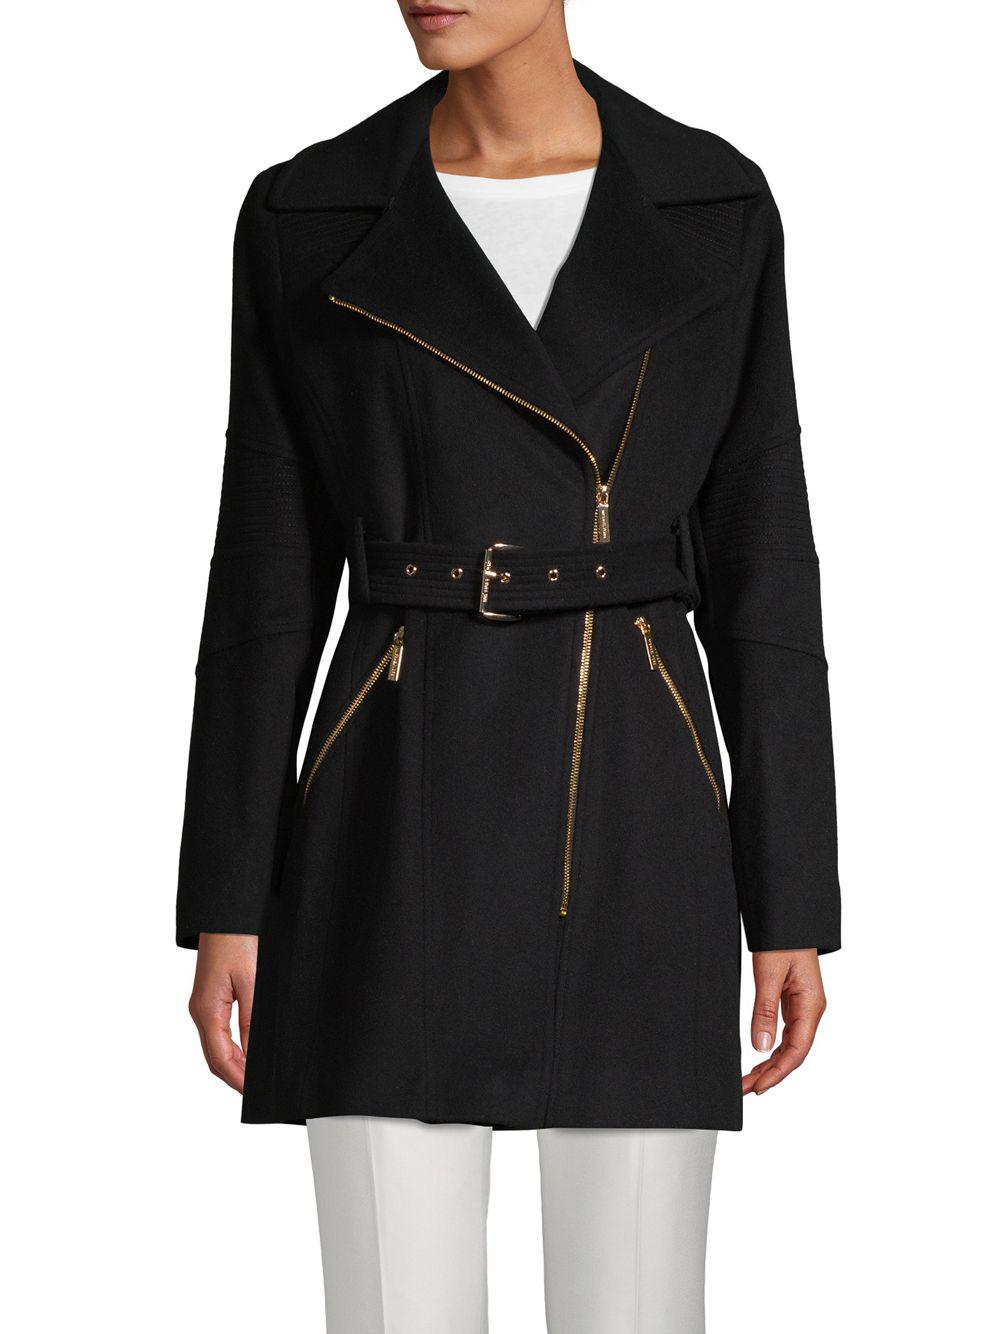 MICHAEL Michael Kors Belted Wool-blend Coat in Black - Lyst